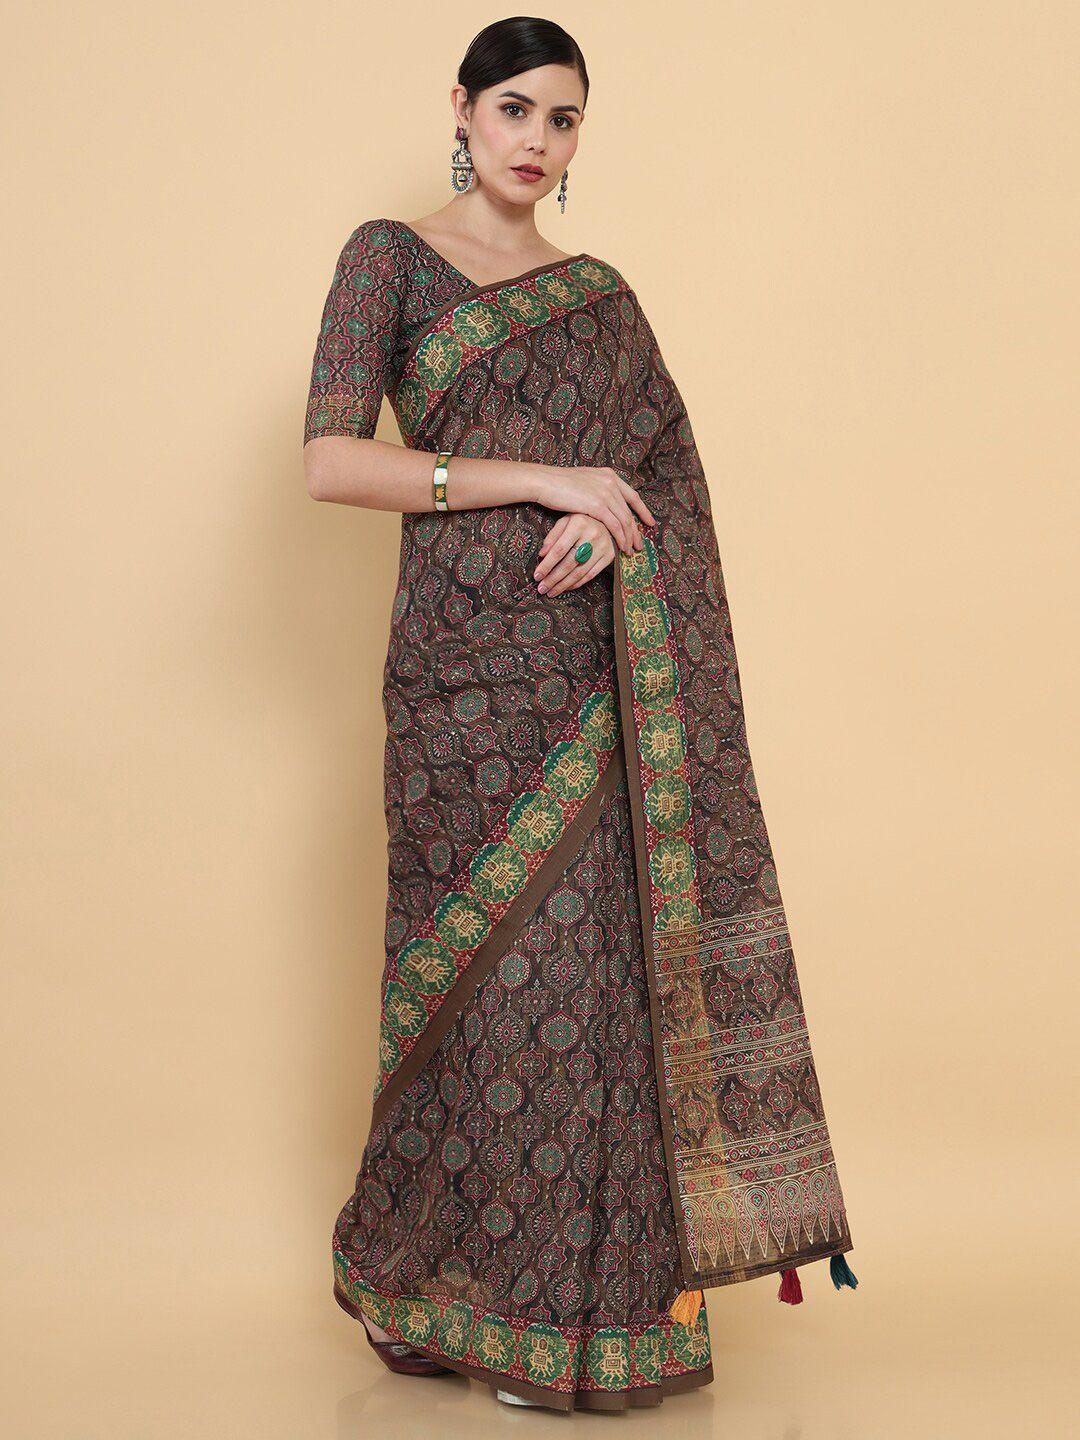 soch brown & green printed ethnic motifs saree